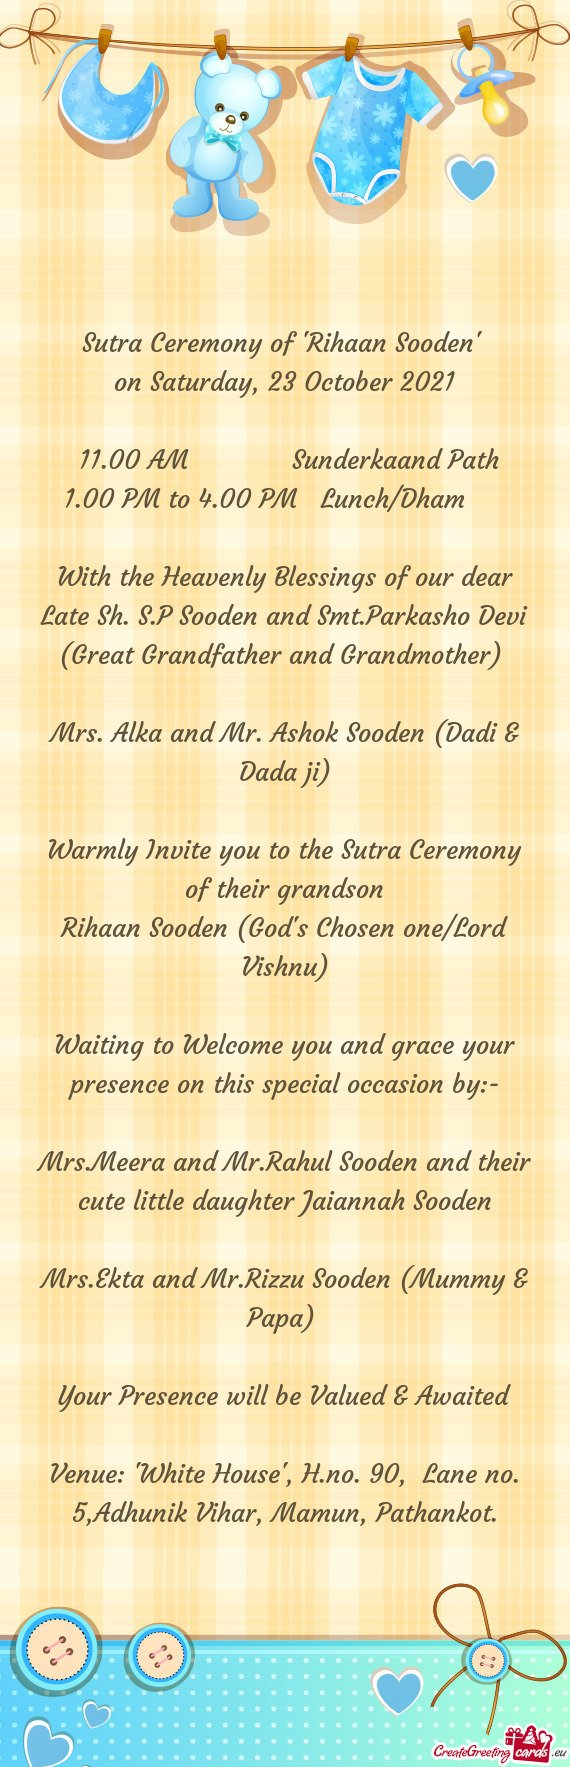 Mrs. Alka and Mr. Ashok Sooden (Dadi & Dada ji)